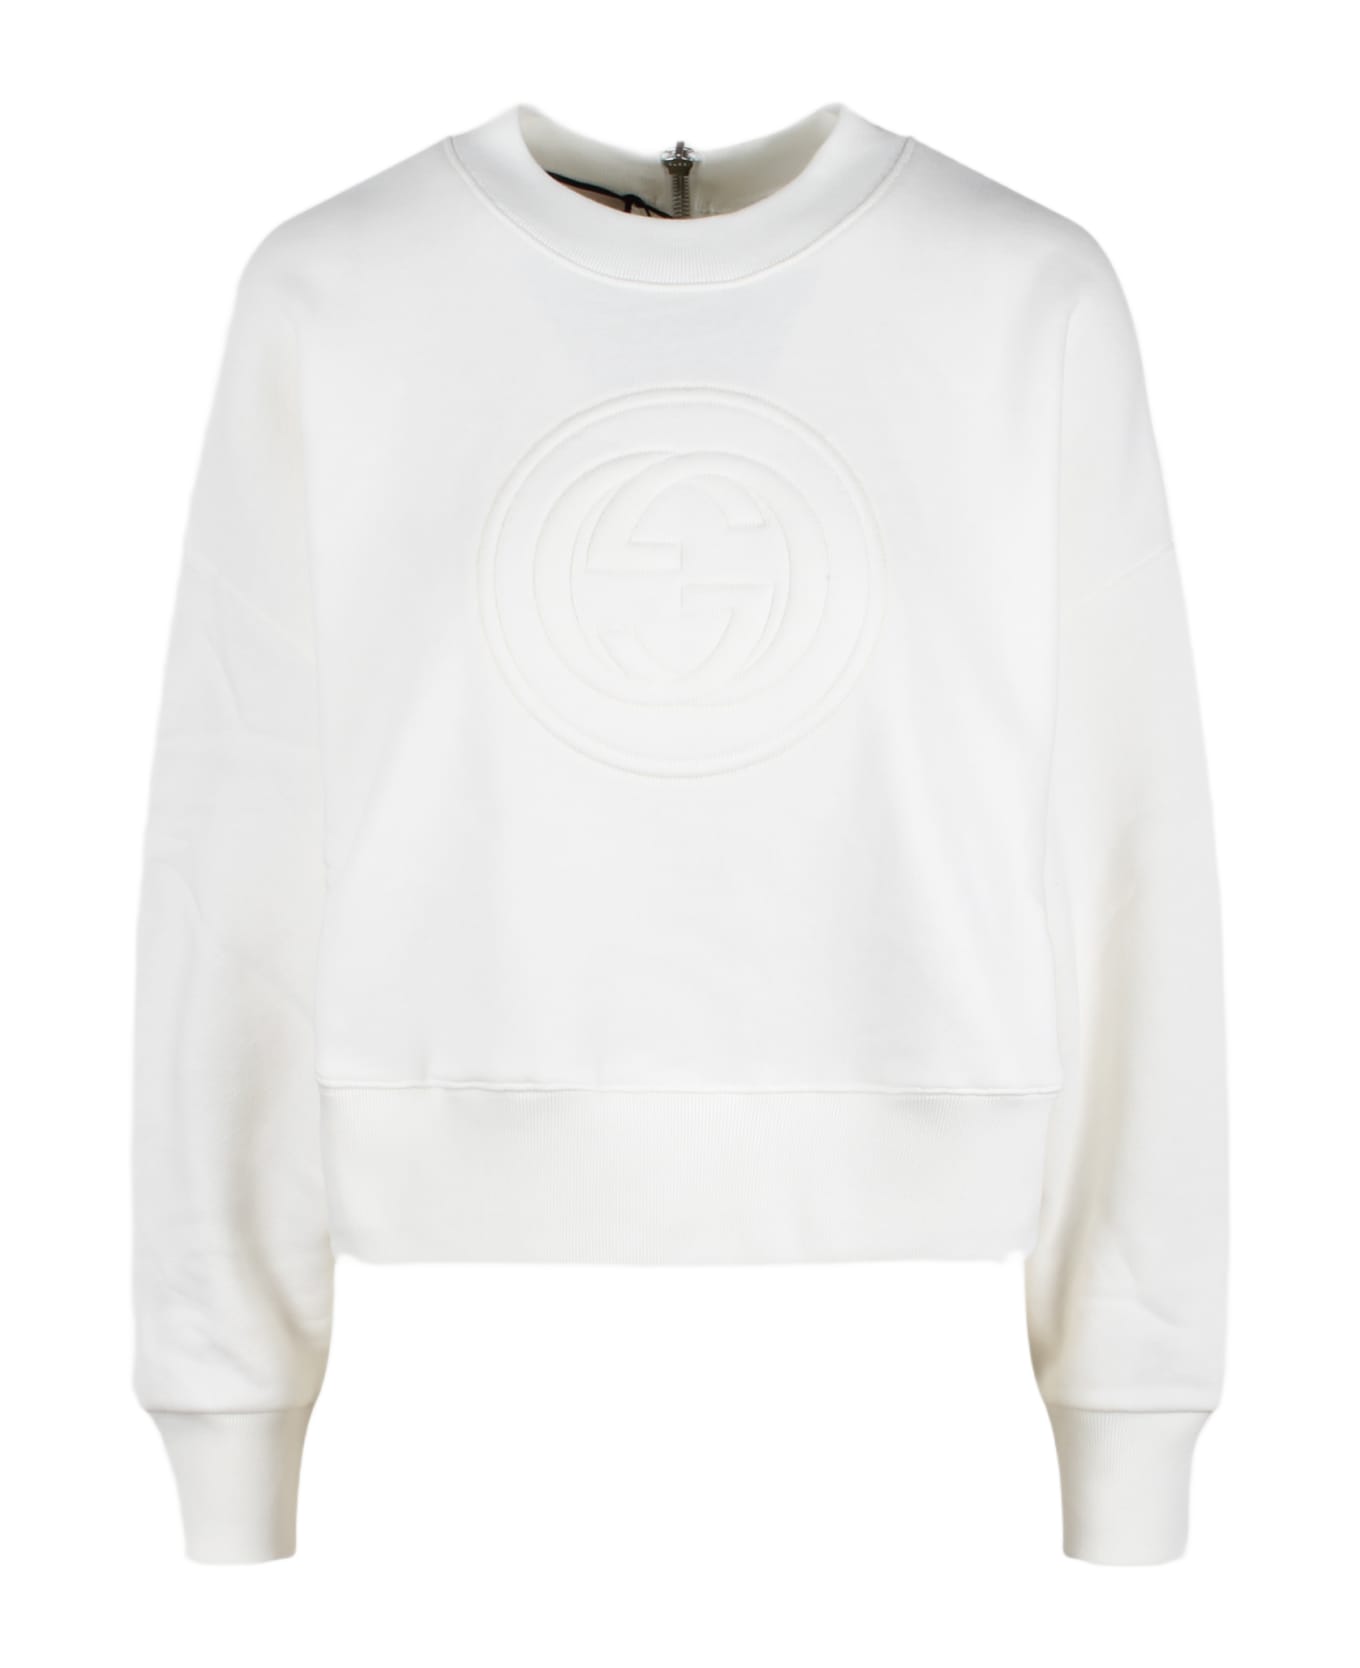 Gucci Interlocking G Jersey Sweatshirt - White